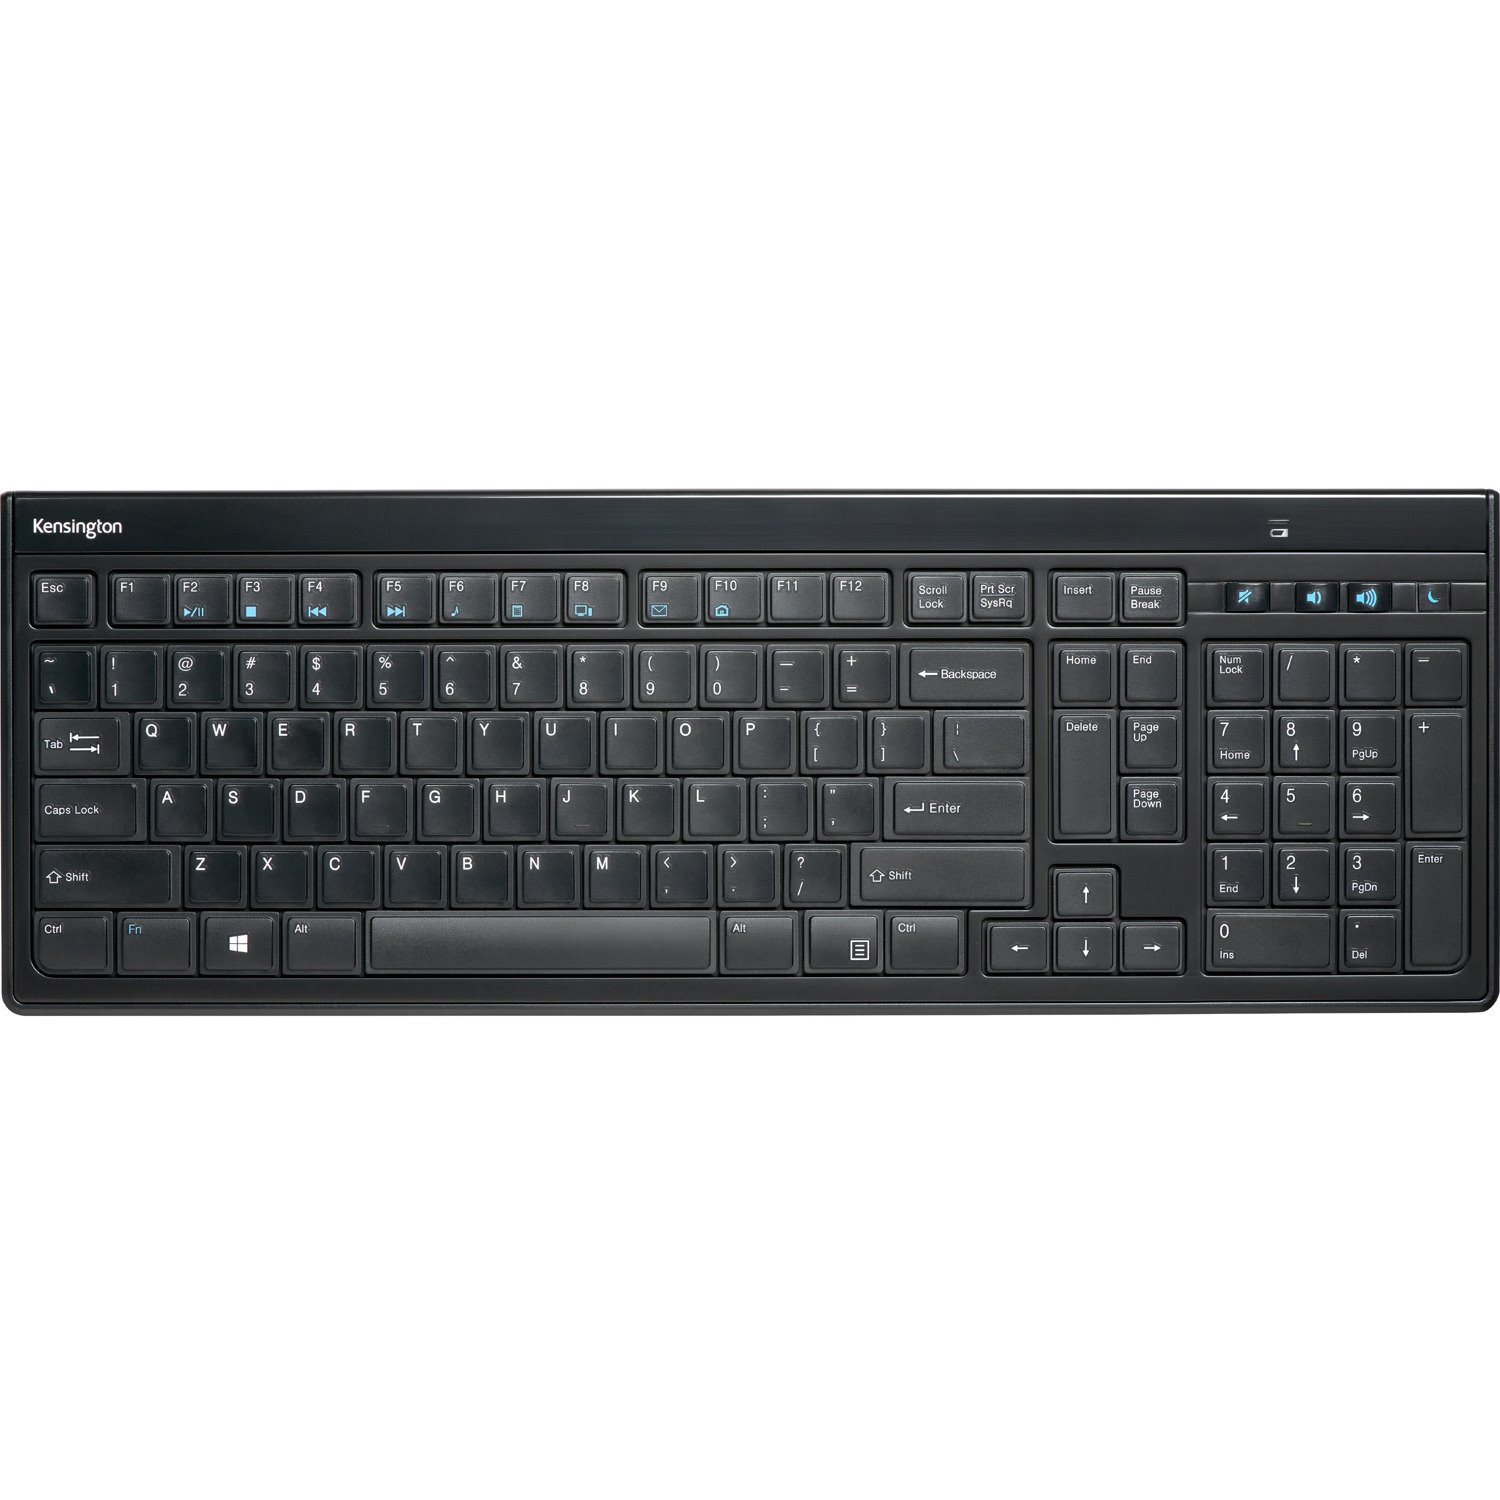 Kensington SlimType Keyboard - Wireless Connectivity - USB Interface - Black